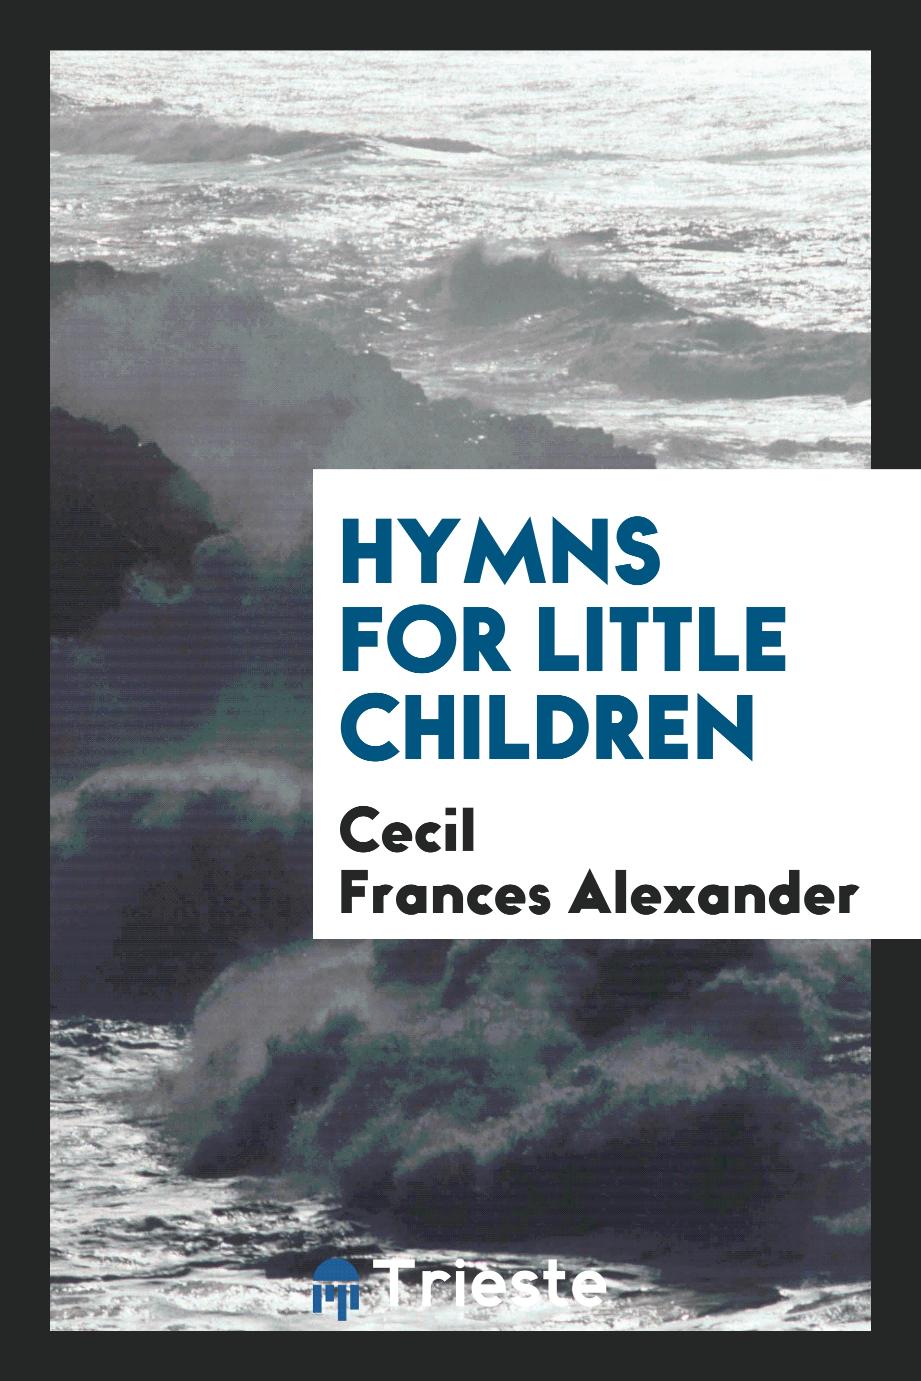 Hymns for little children